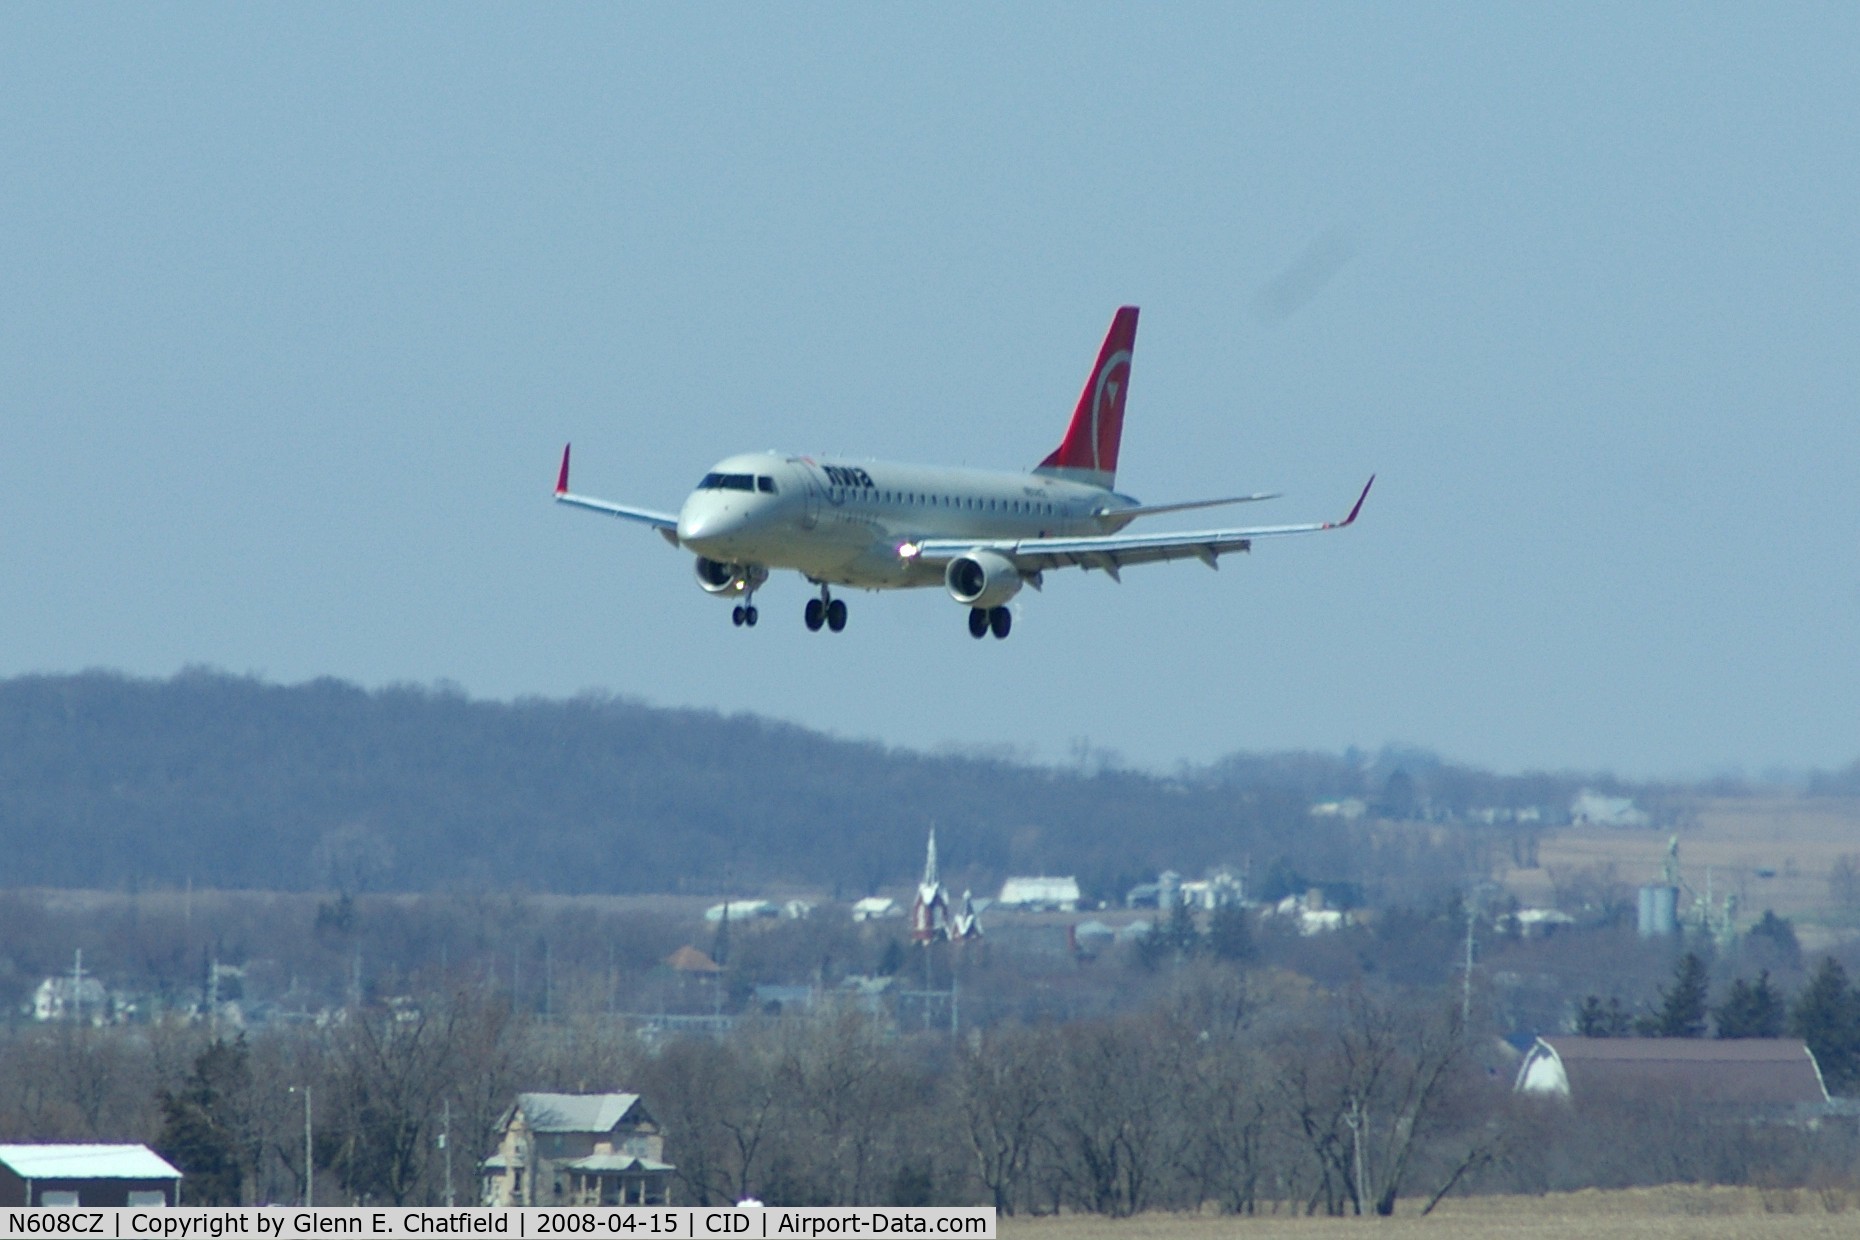 N608CZ, 2007 Embraer 175LR (ERJ-170-200LR) C/N 17000195, Compass approaching Runway 13.  The church in Fairfax clearly seen.